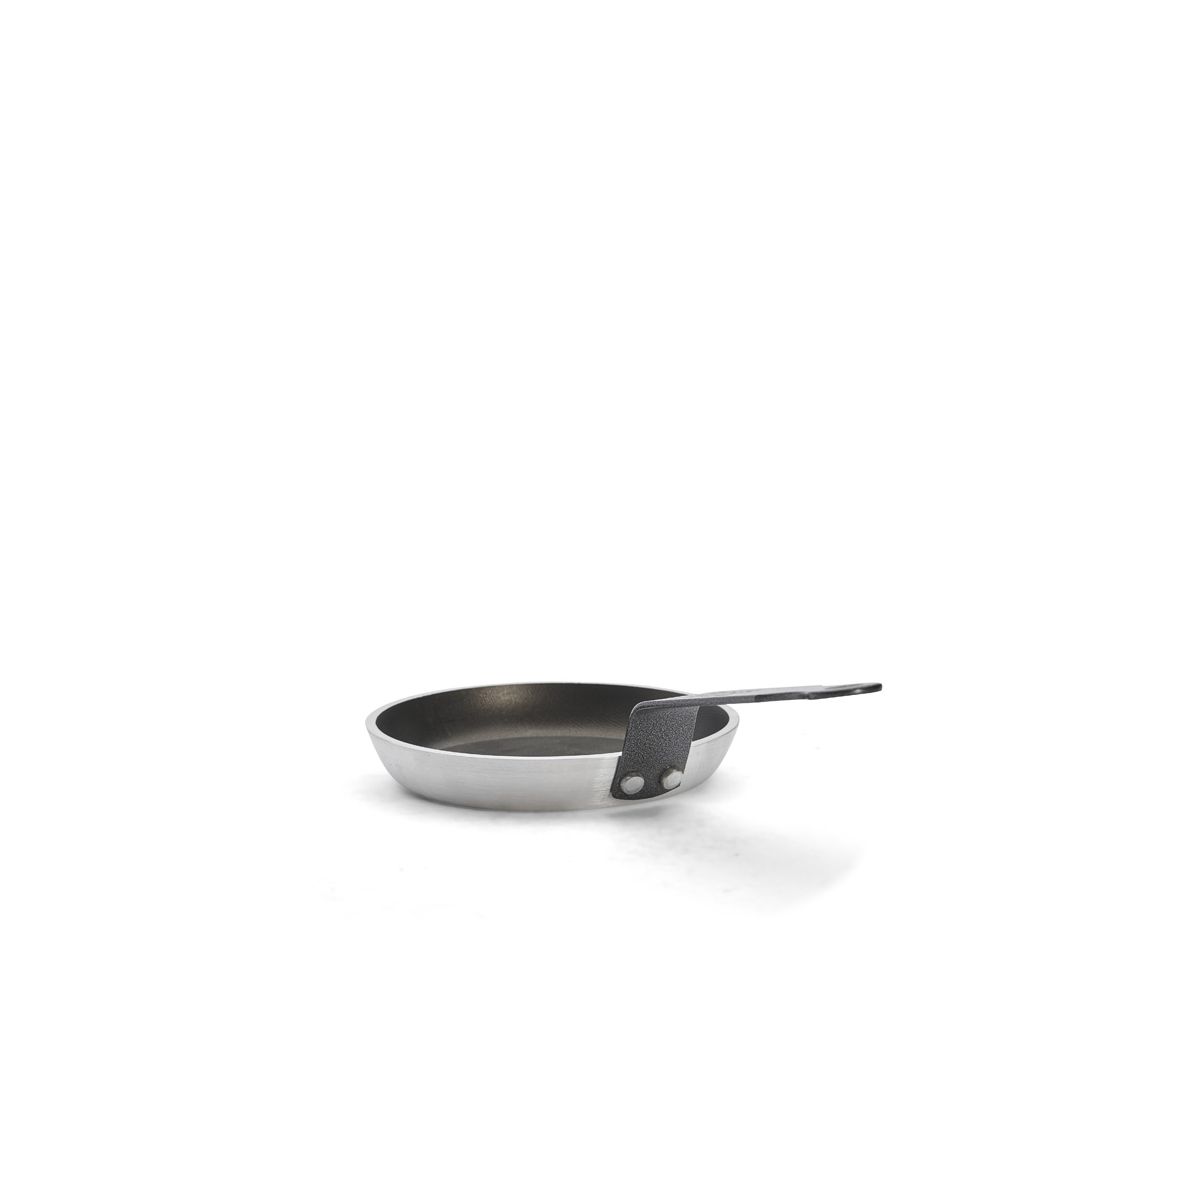 Mini poêle à blinis/pancakes Easy cook & Clean, Tefal (Ø12 cm